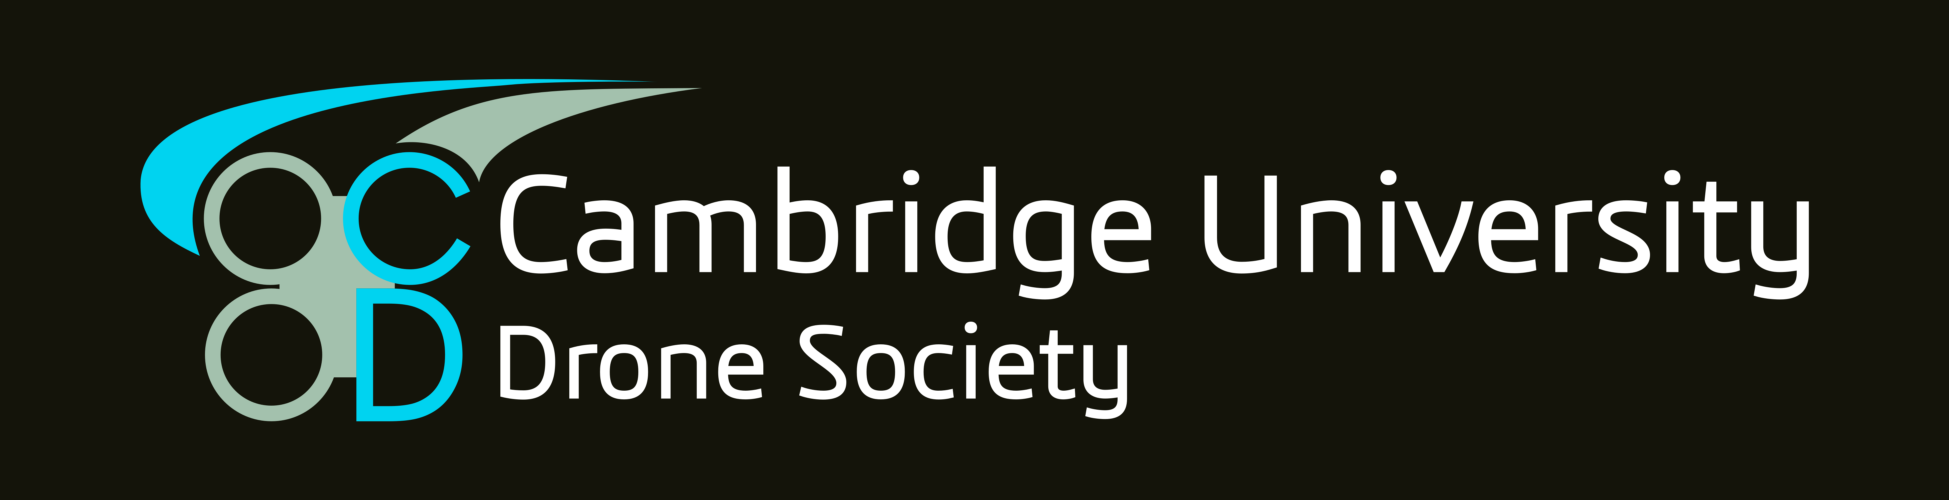 Cambridge University Drone Society